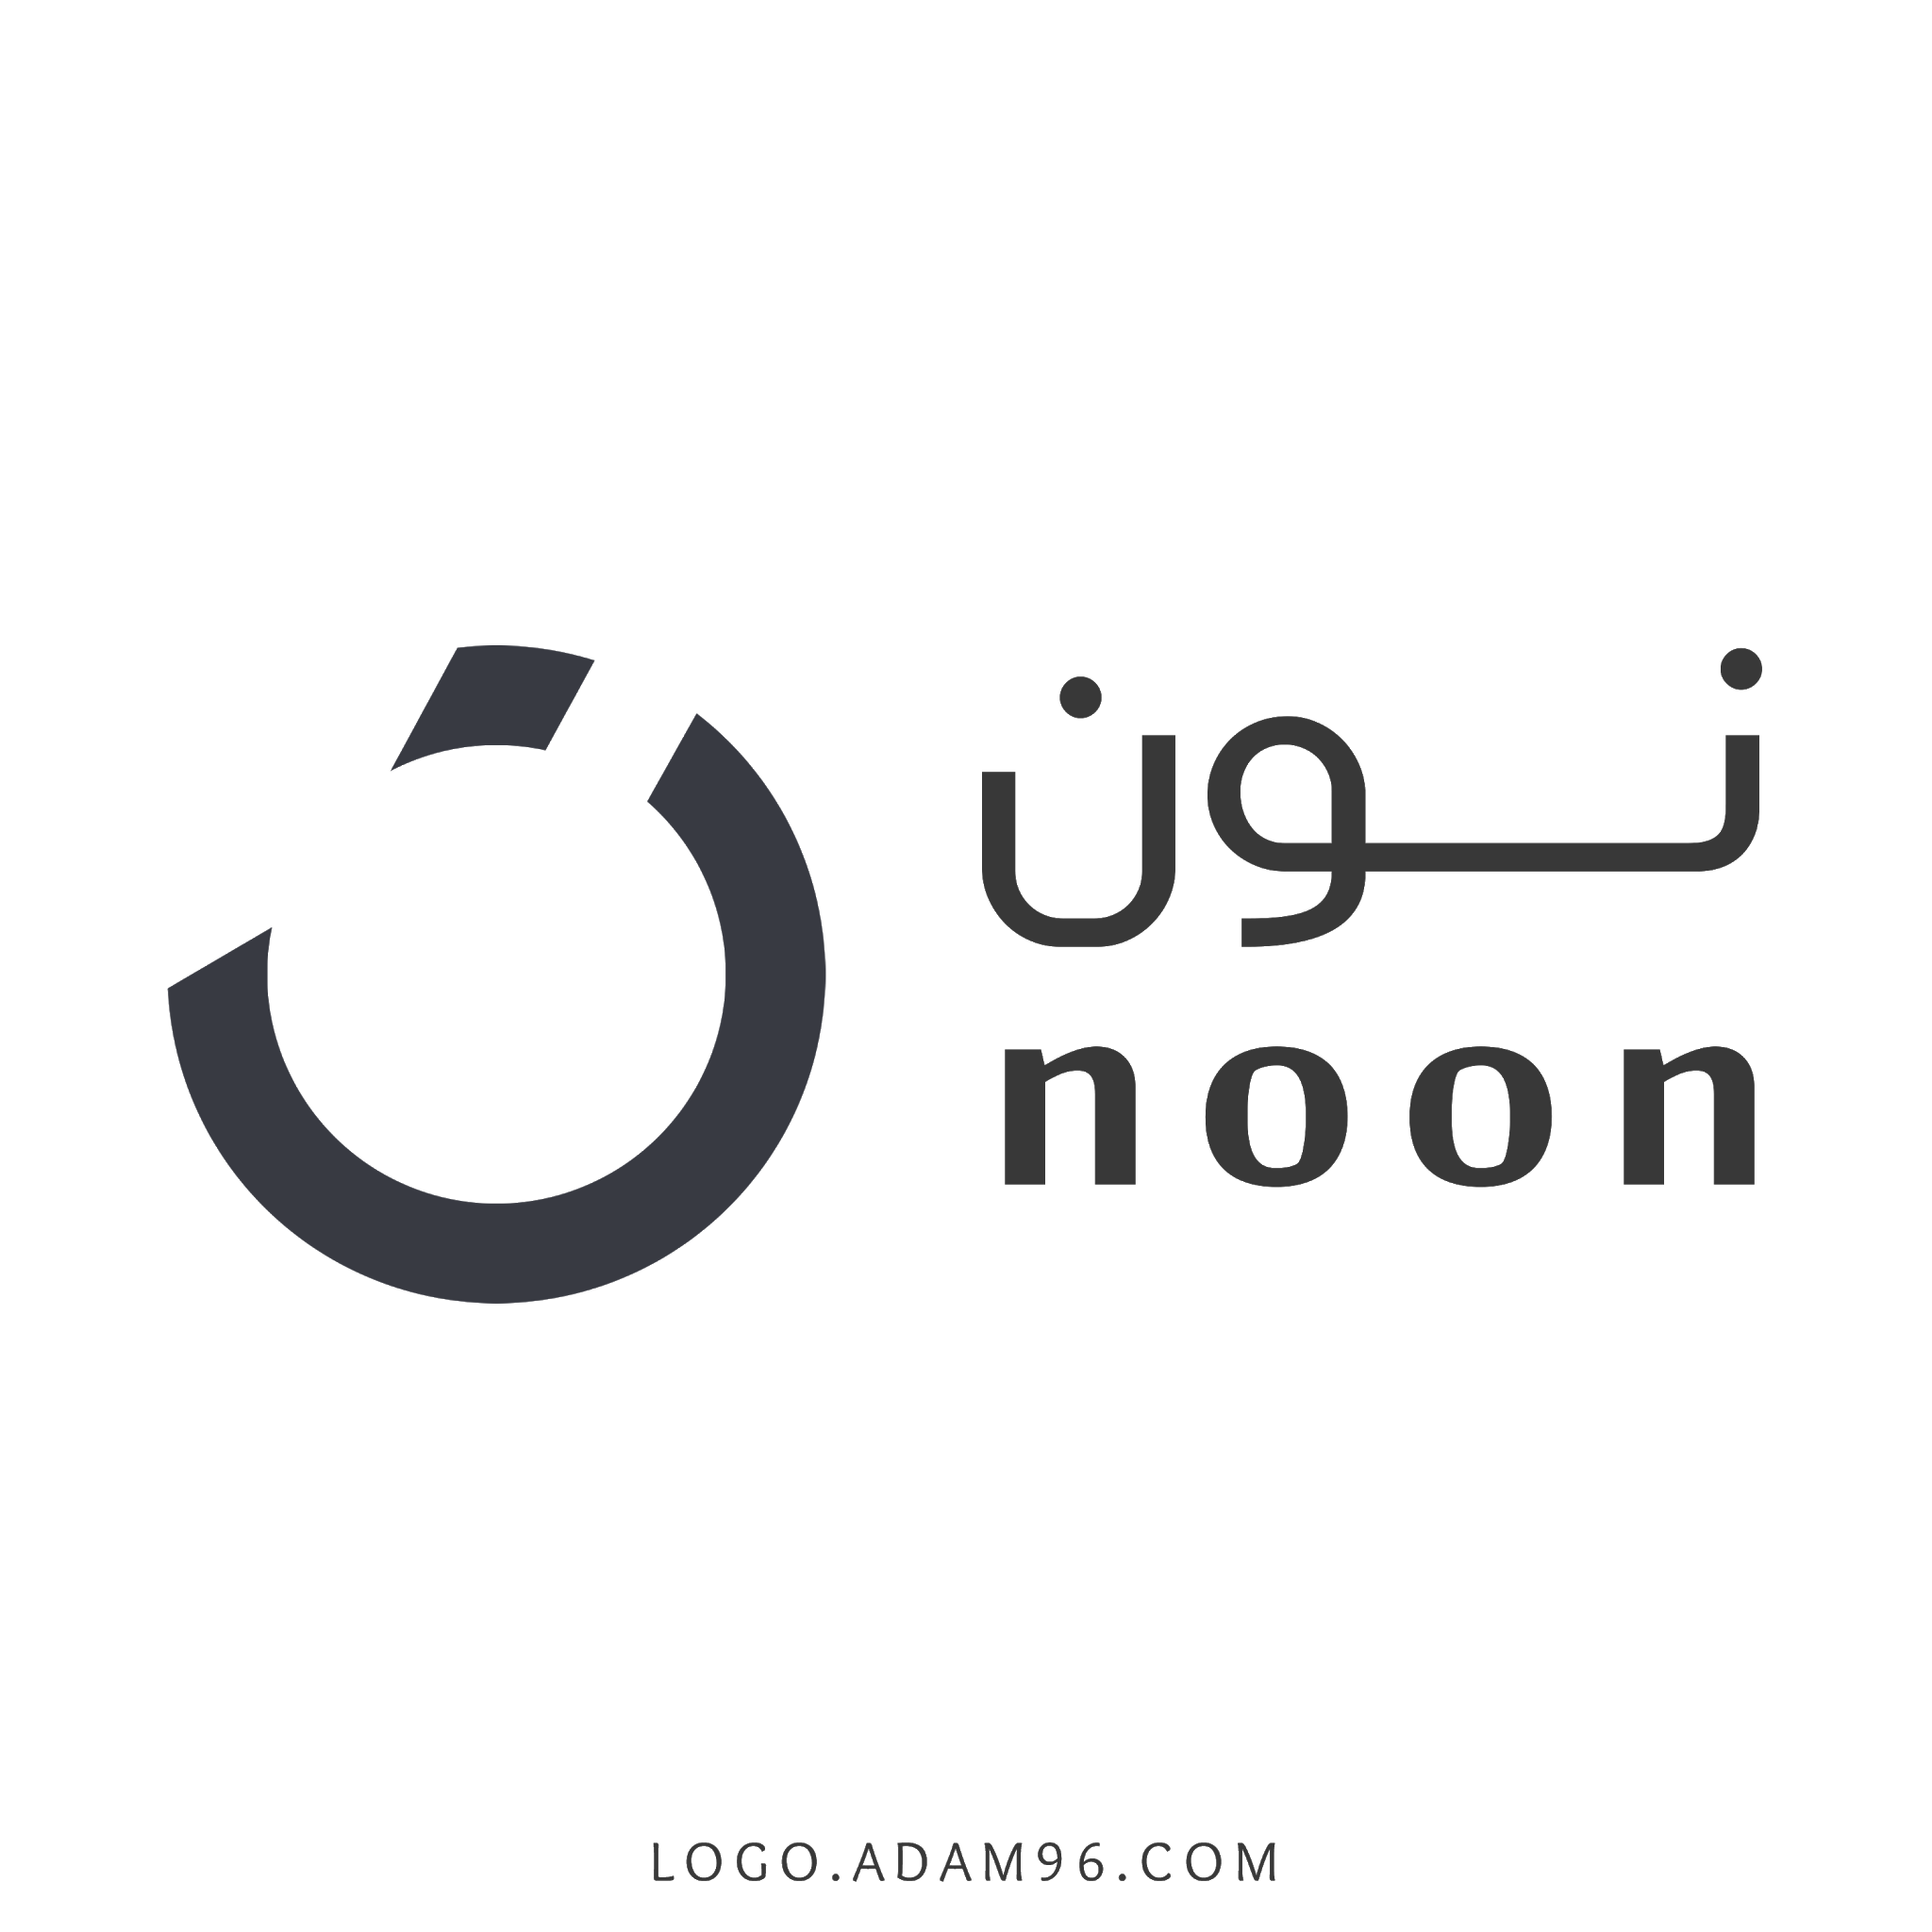 Noon. Noon logo. Логотип студии полдень. Hackernoon лого.